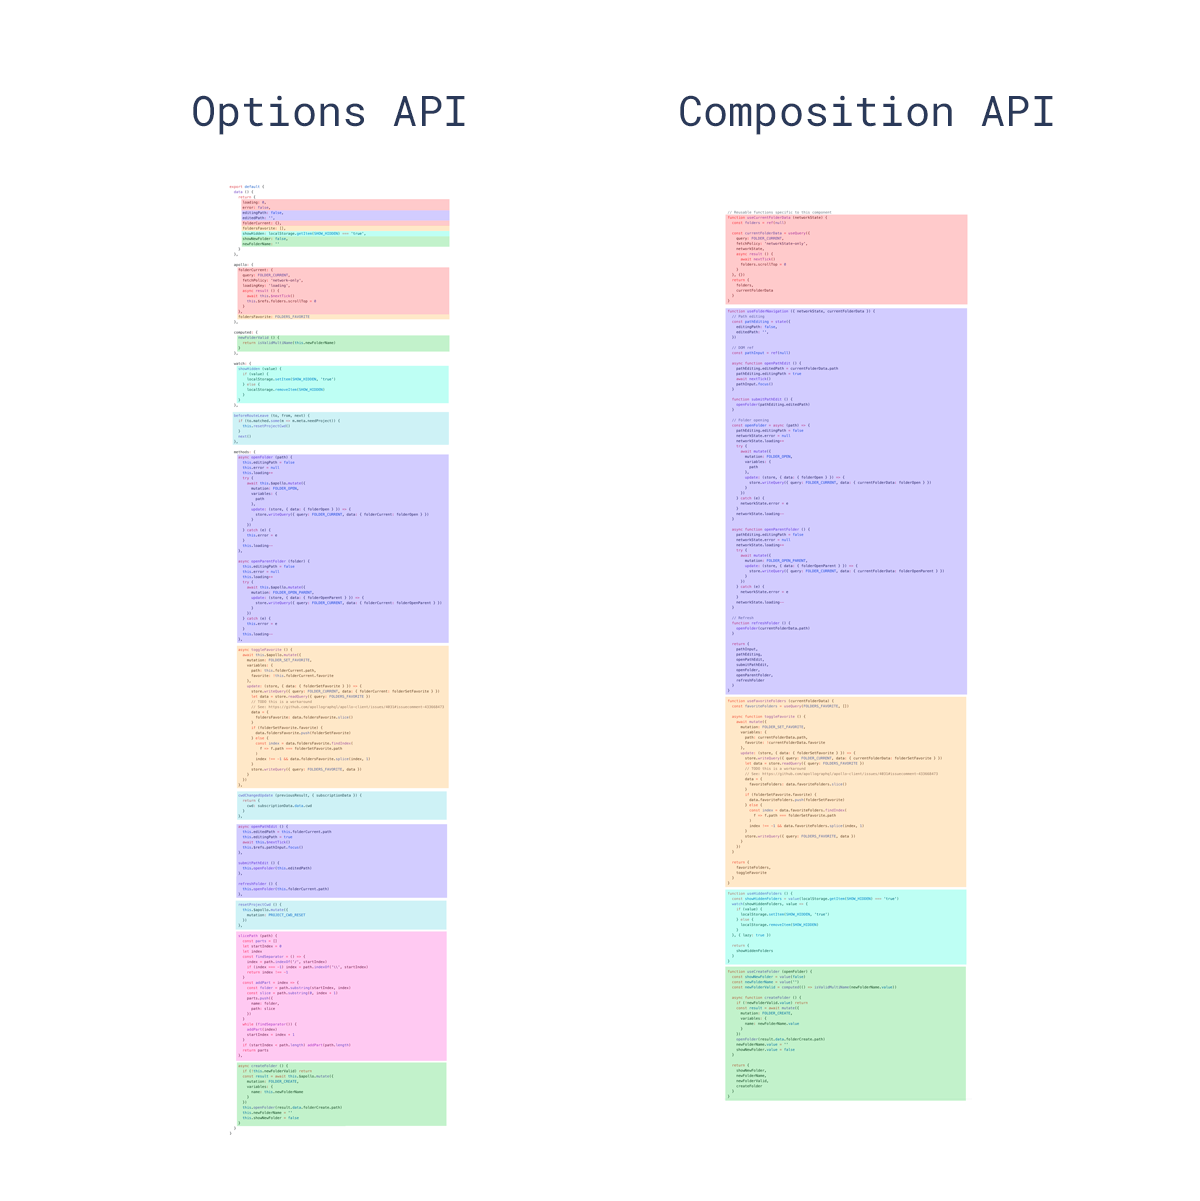 Options API and Composition API visualization